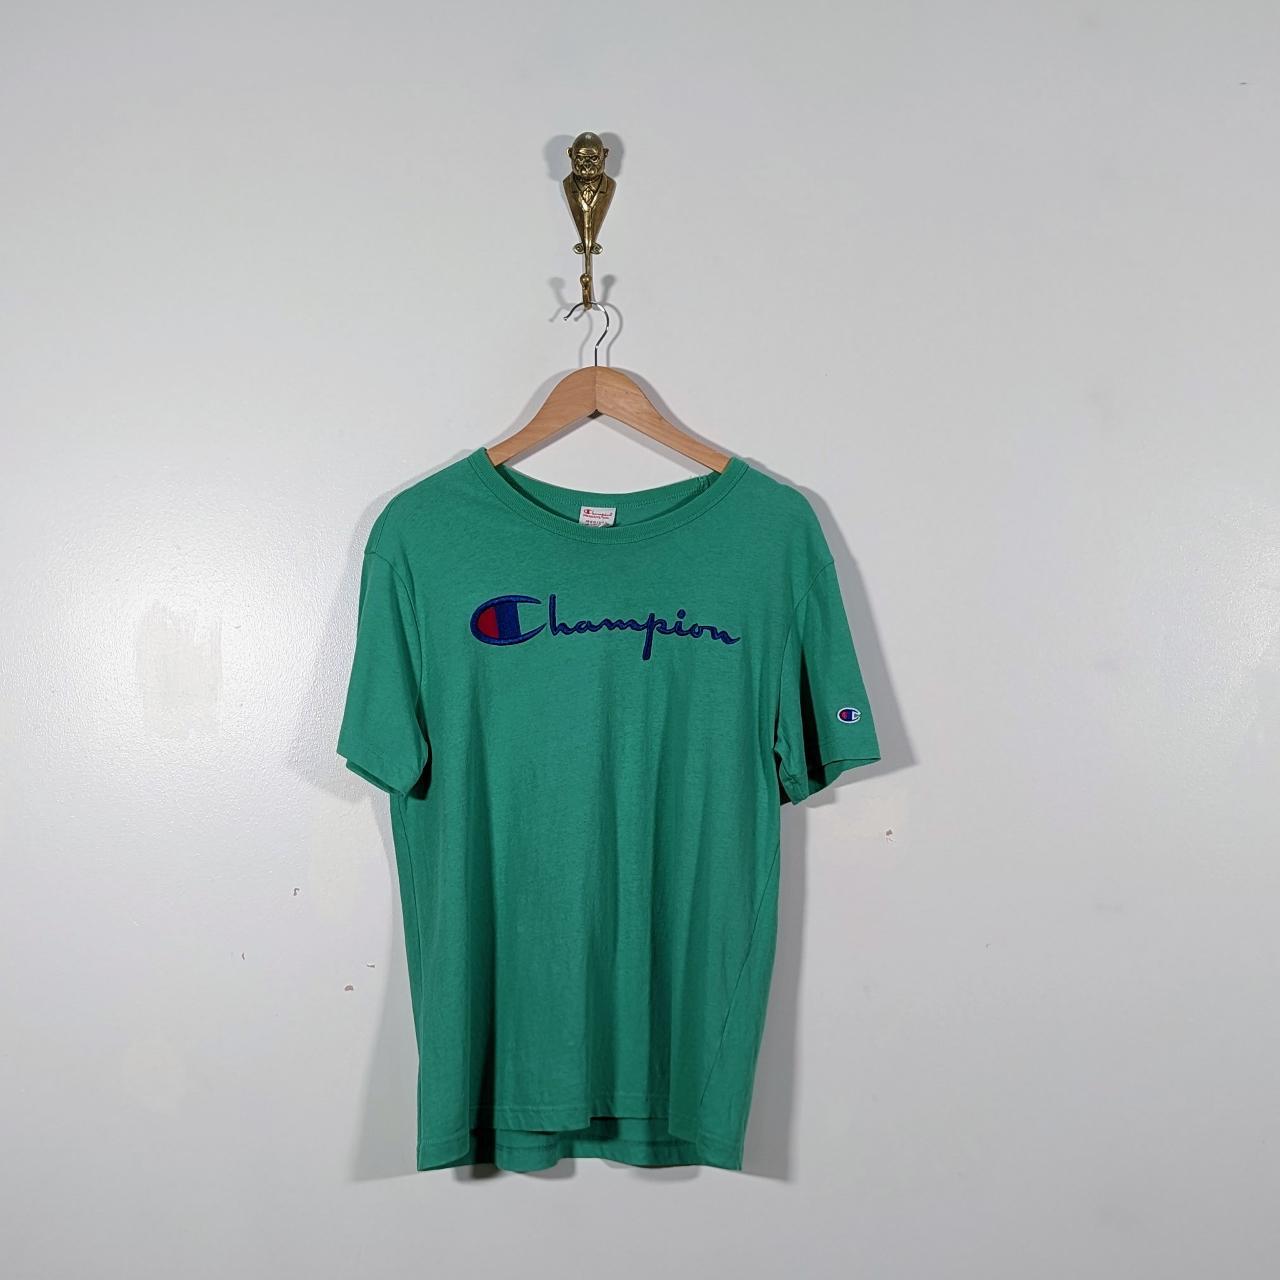 Champion Men's Green and Blue T-shirt | Depop